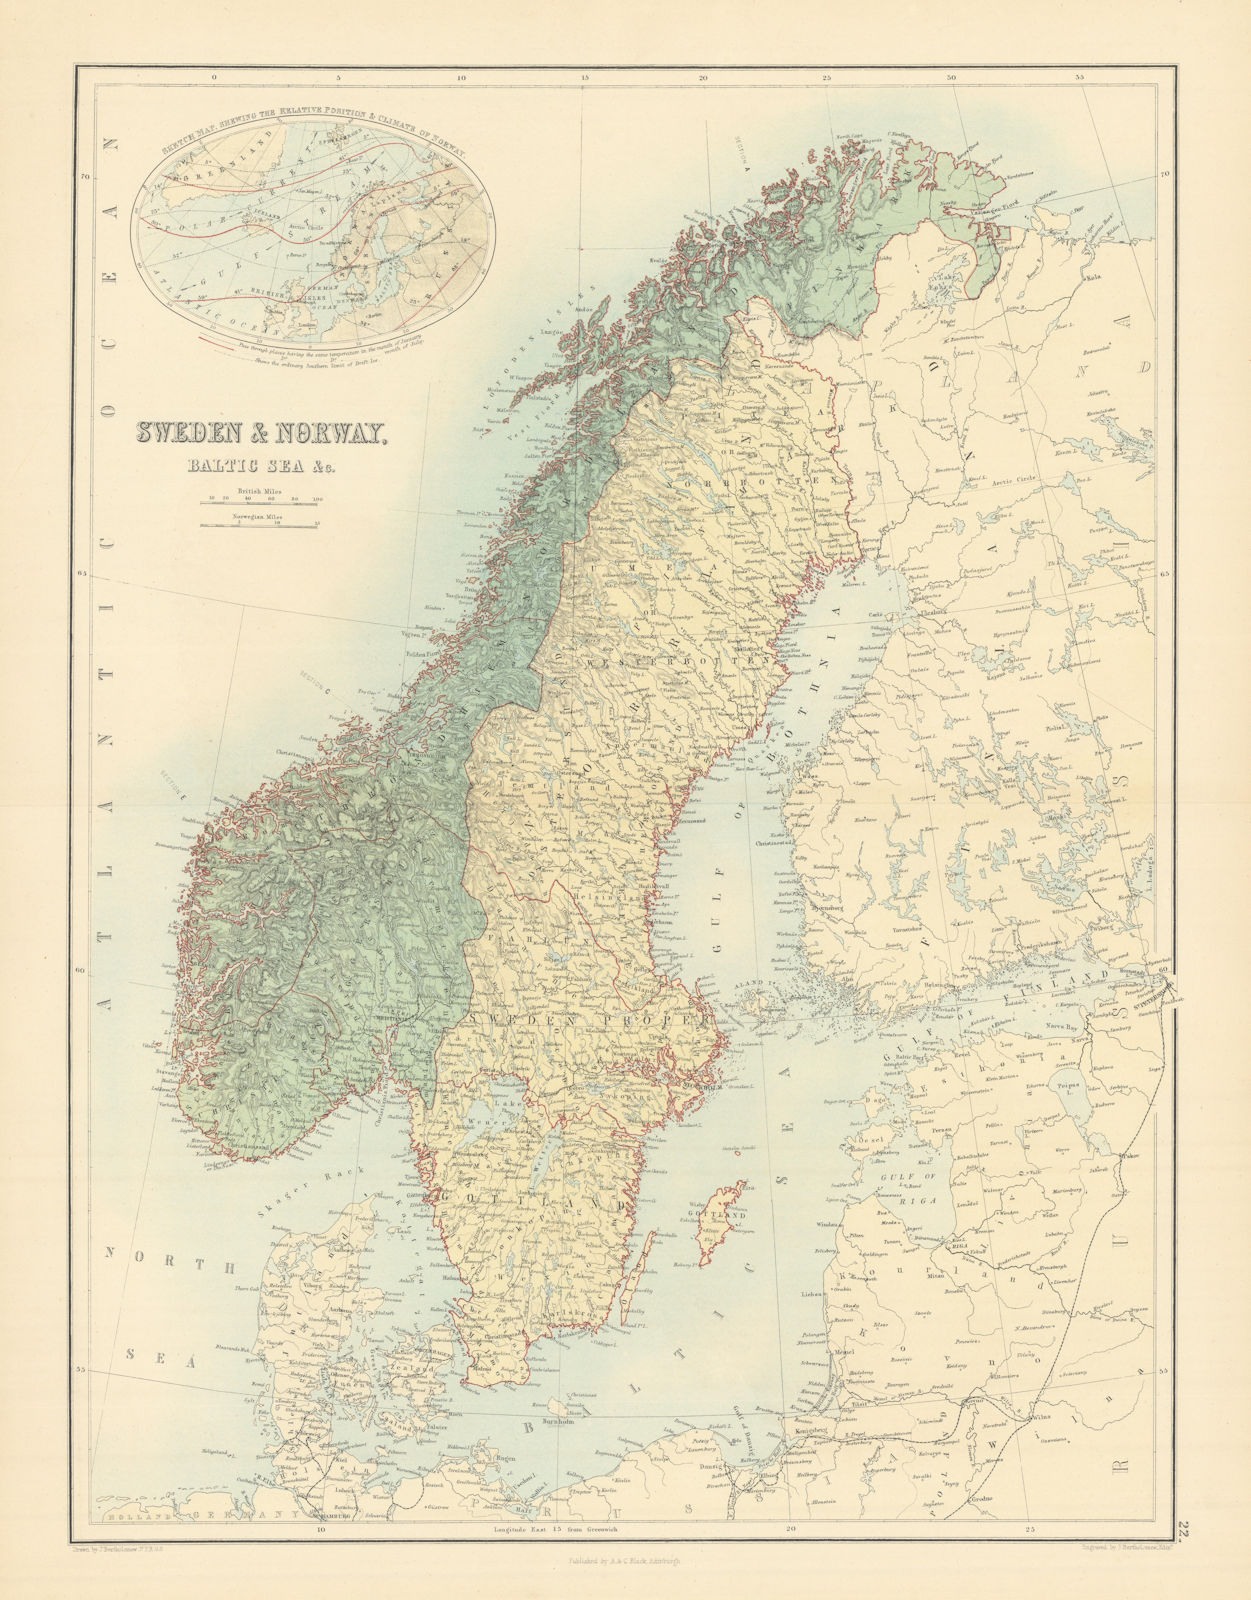 Sweden, Norway & the Baltic Sea. Scandinavia. BARTHOLOMEW 1862 old antique map